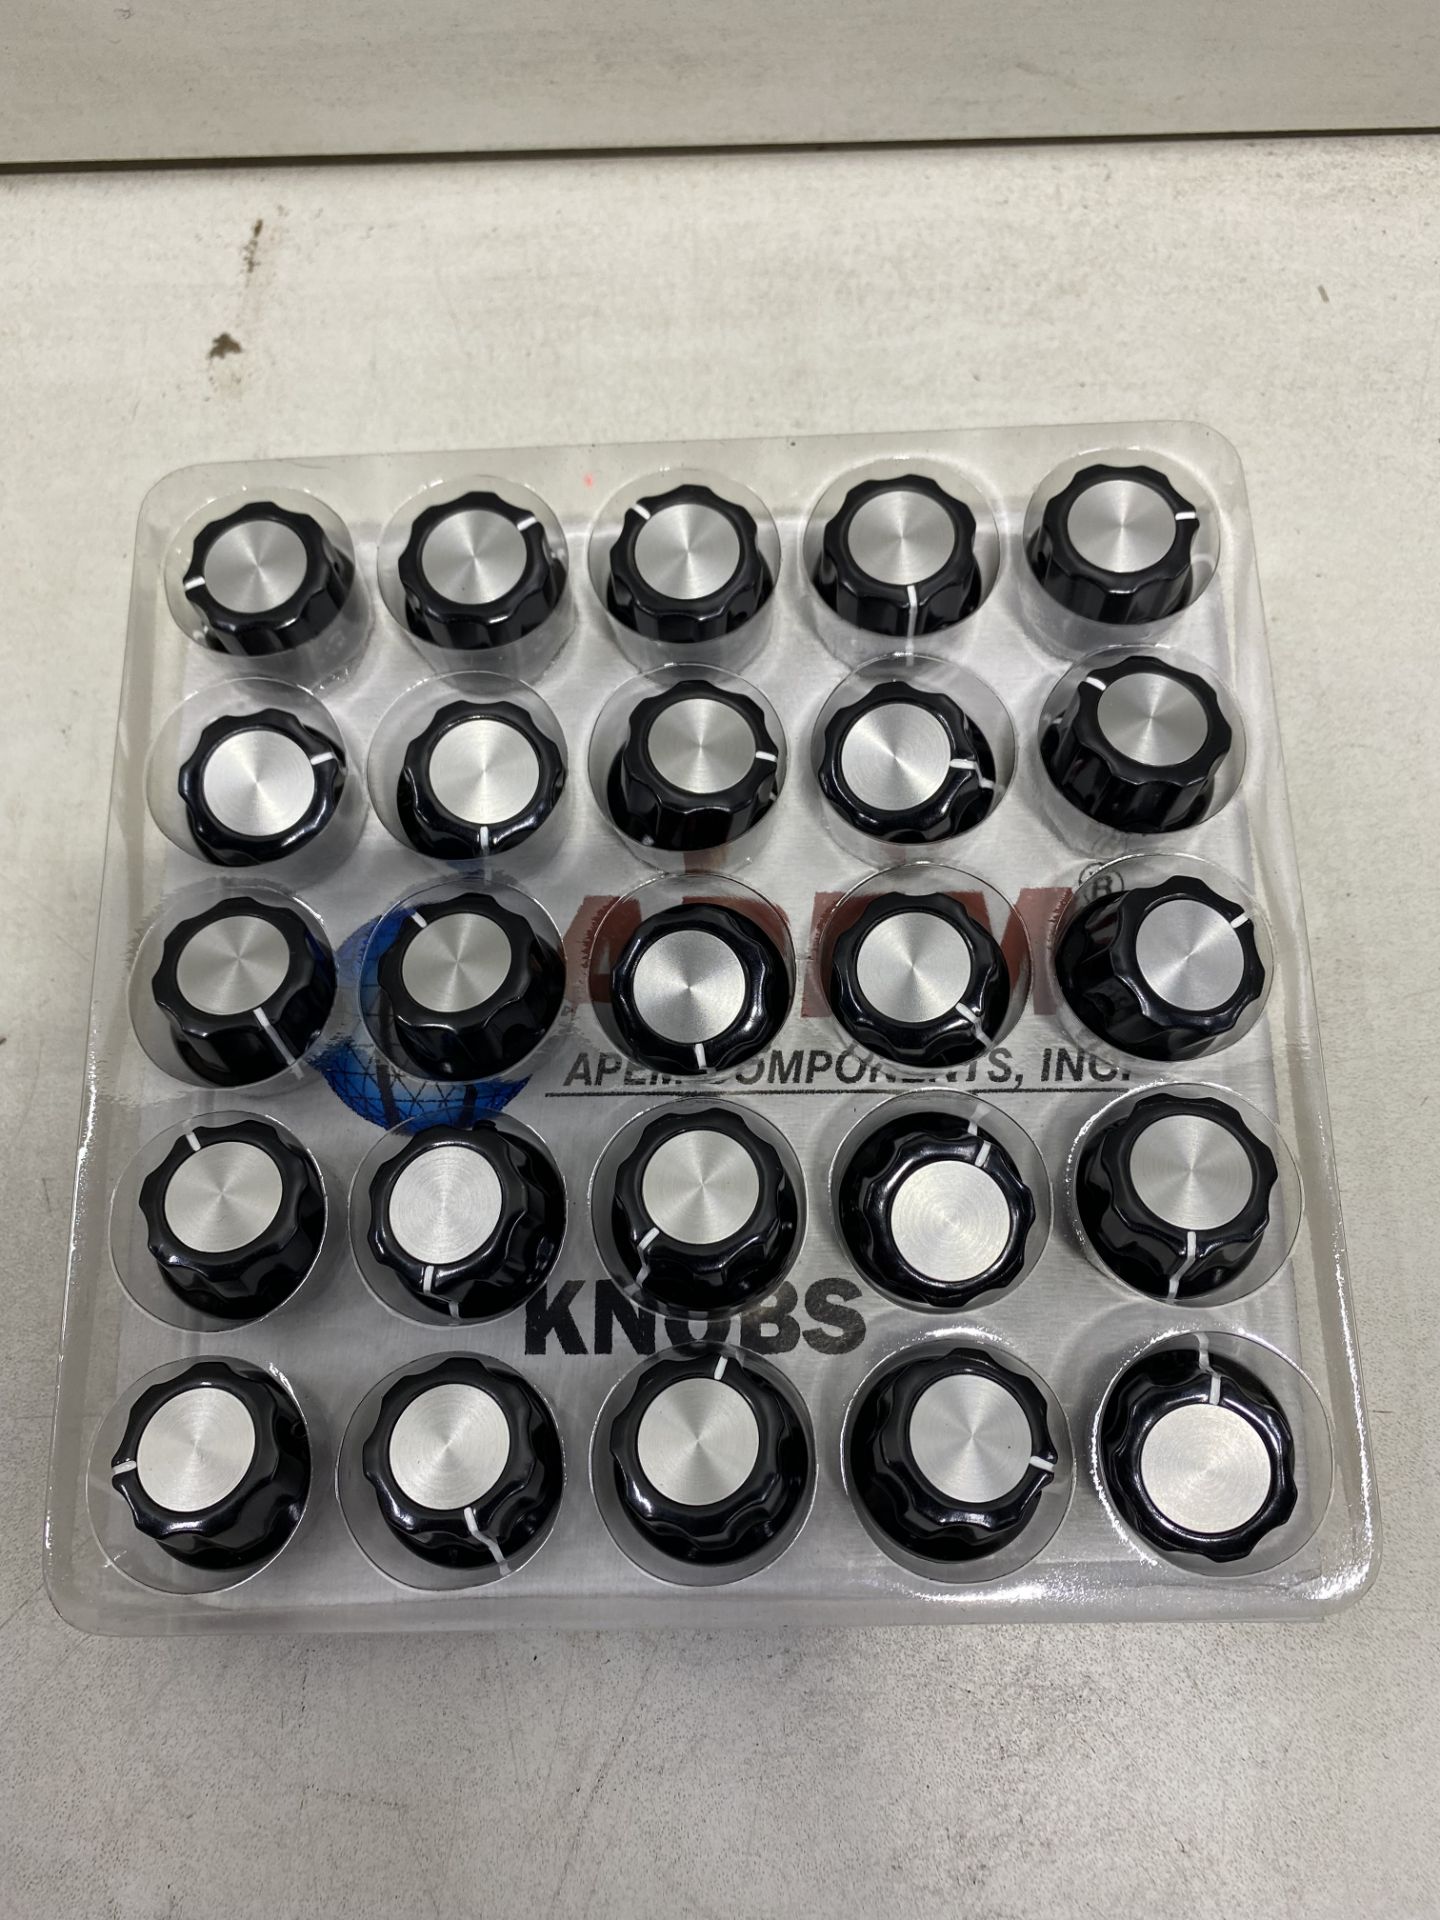 20 x Packs of 25 Apem Components Inc MPKES 90B1/4 Black Control Knobs/Dials - Image 3 of 4